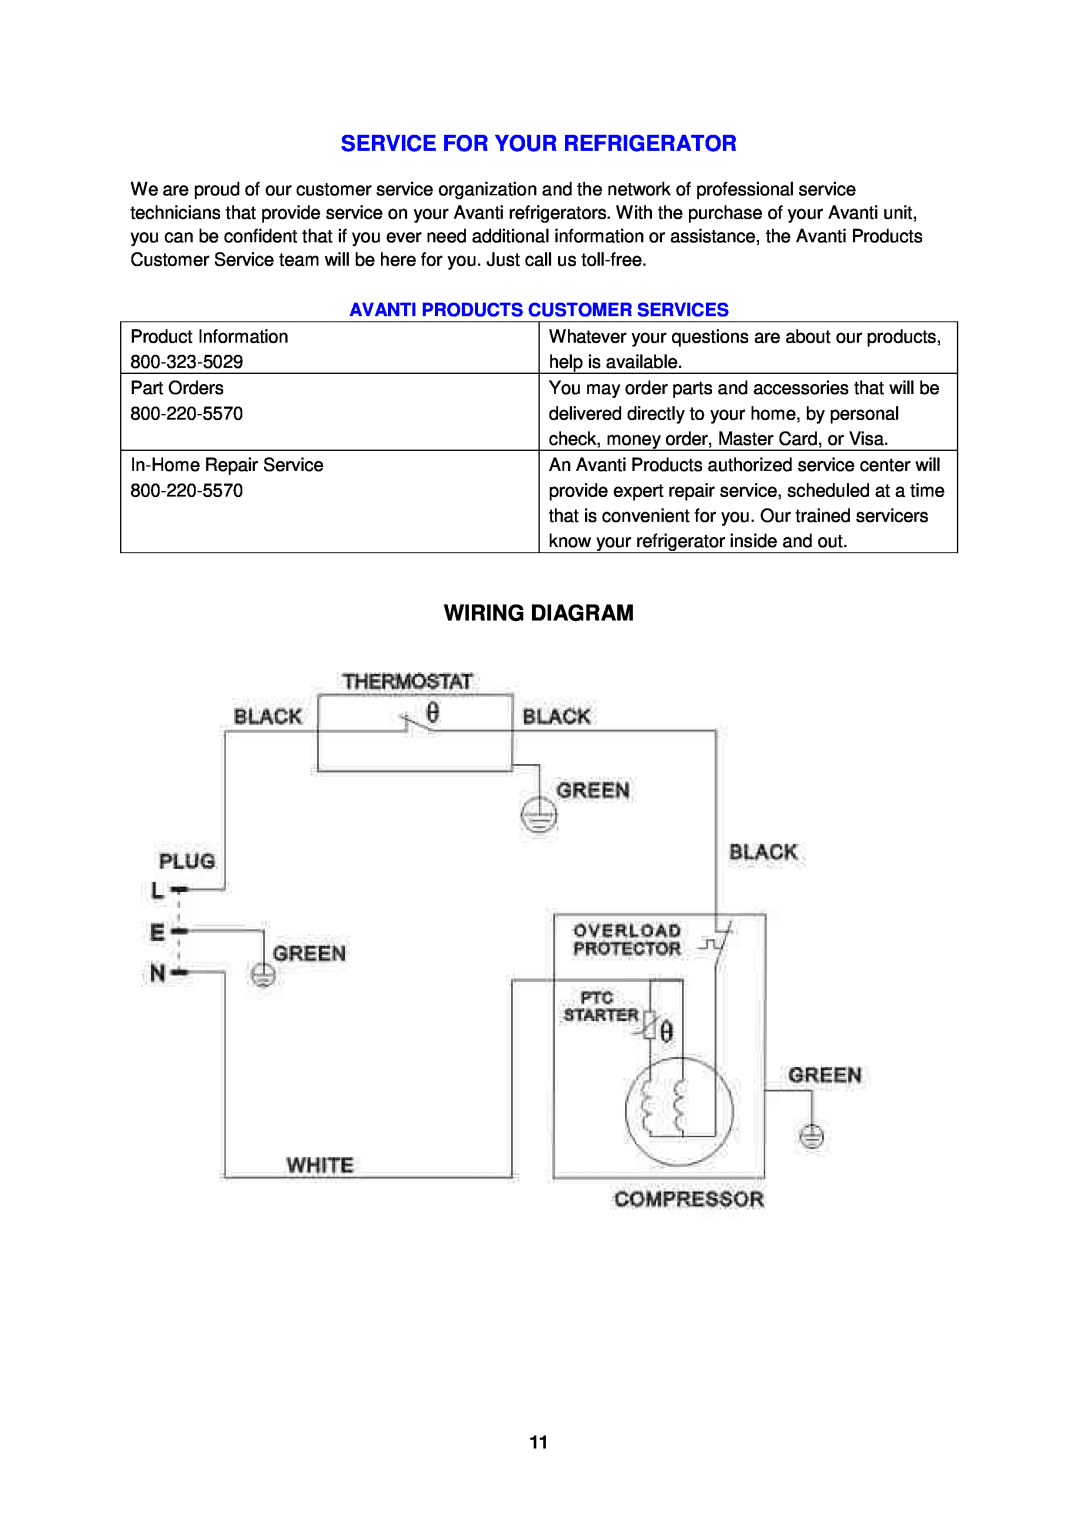 Avanti BCA193BG instruction manual Service For Your Refrigerator, Wiring Diagram, Avanti Products Customer Services 